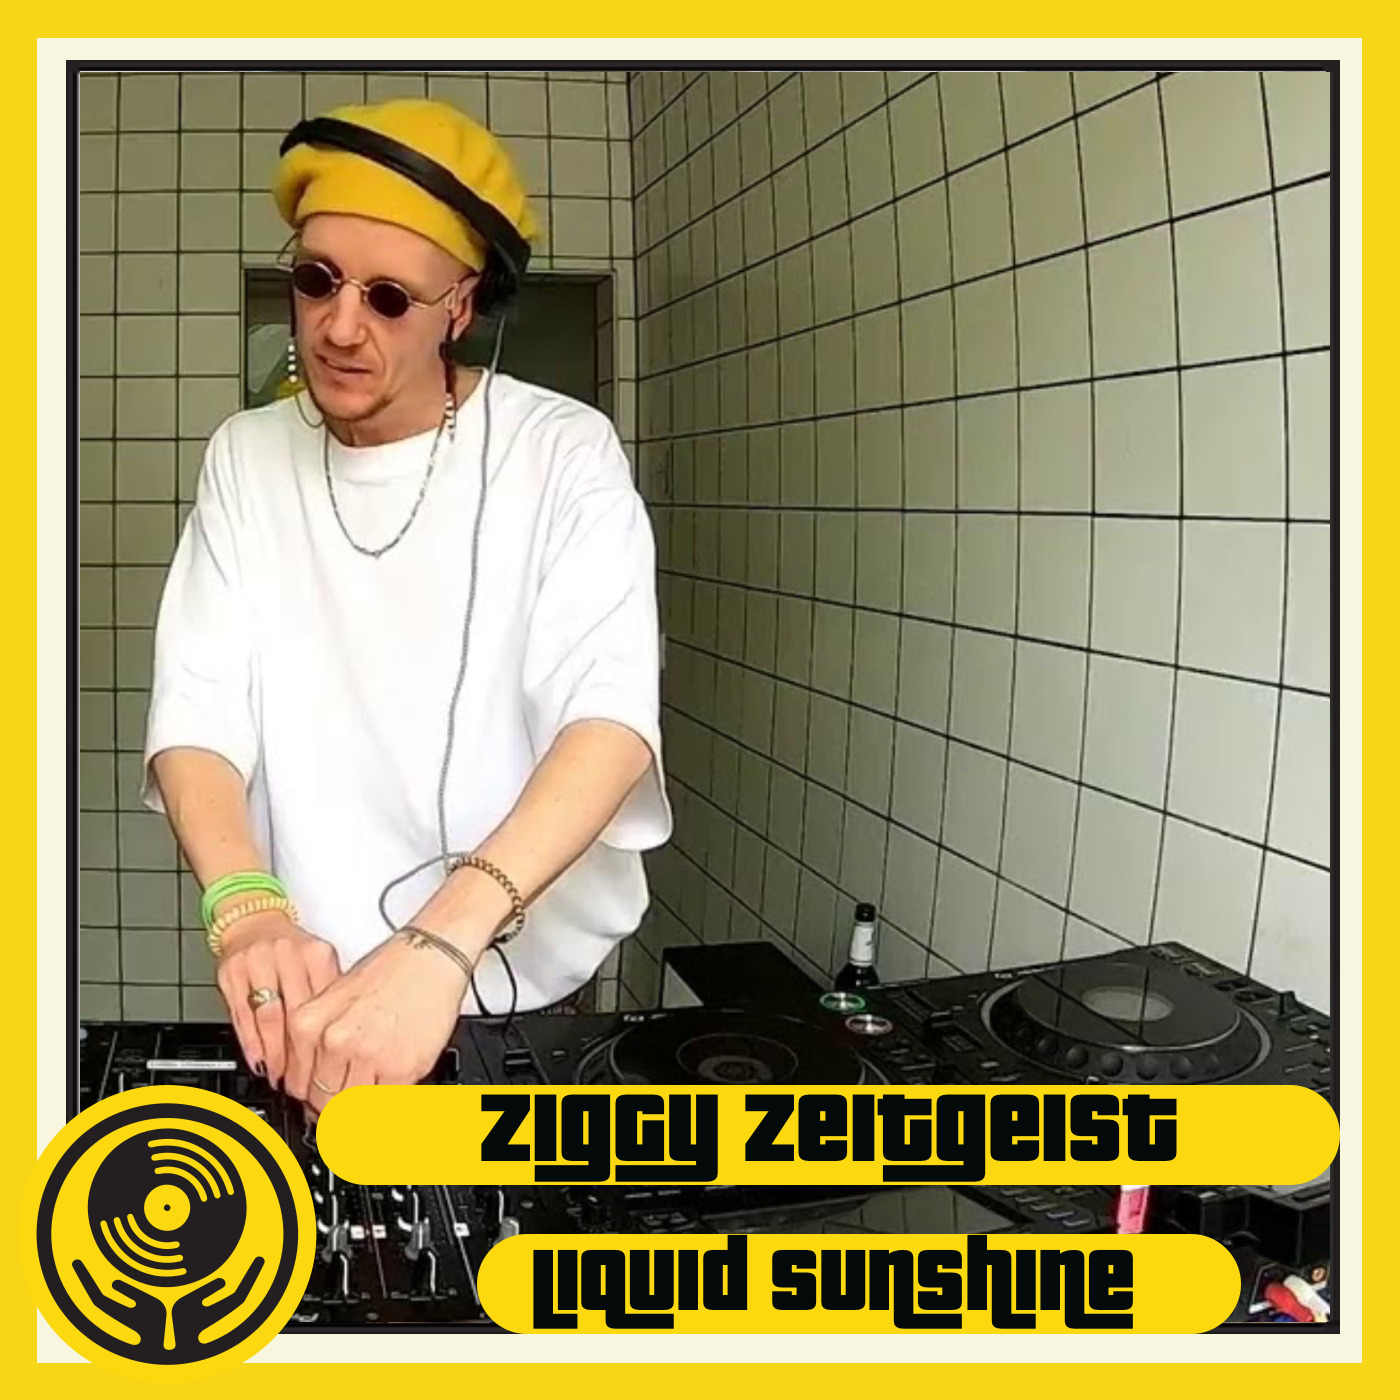 Jazz Infused House Vibes - Interview with Ziggy Zeitgeist - Liquid Sunshine @ The Face Radio - 25-01-2023